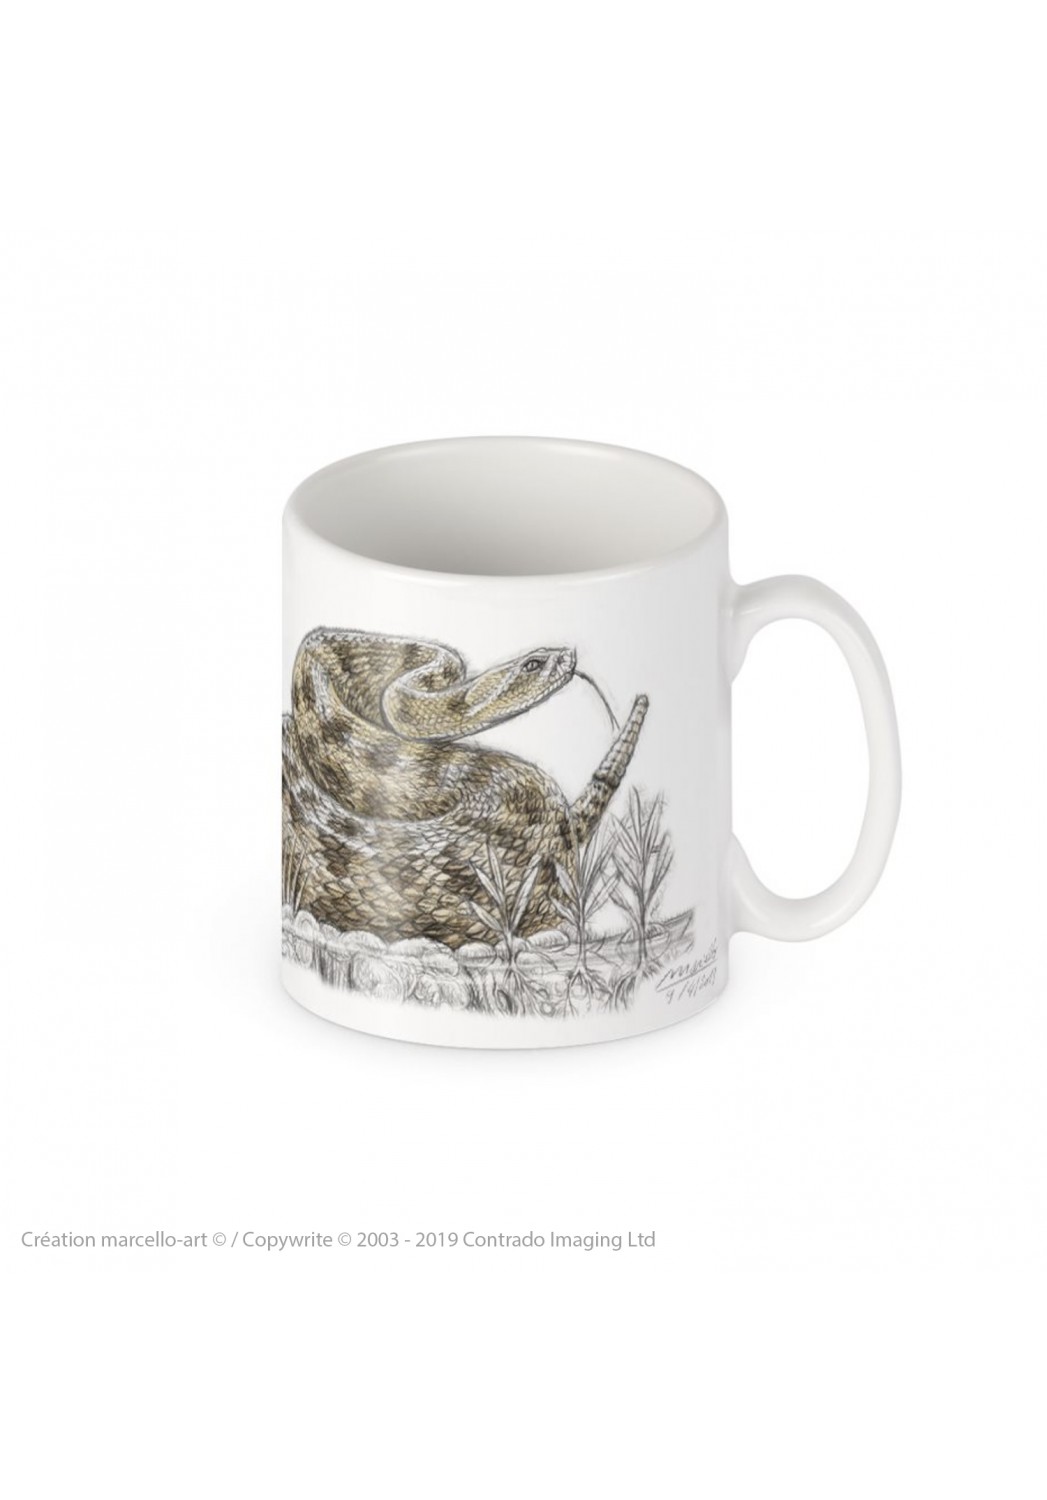 Marcello-art: Decoration accessoiries Porcelain mug 393 rattlesnake